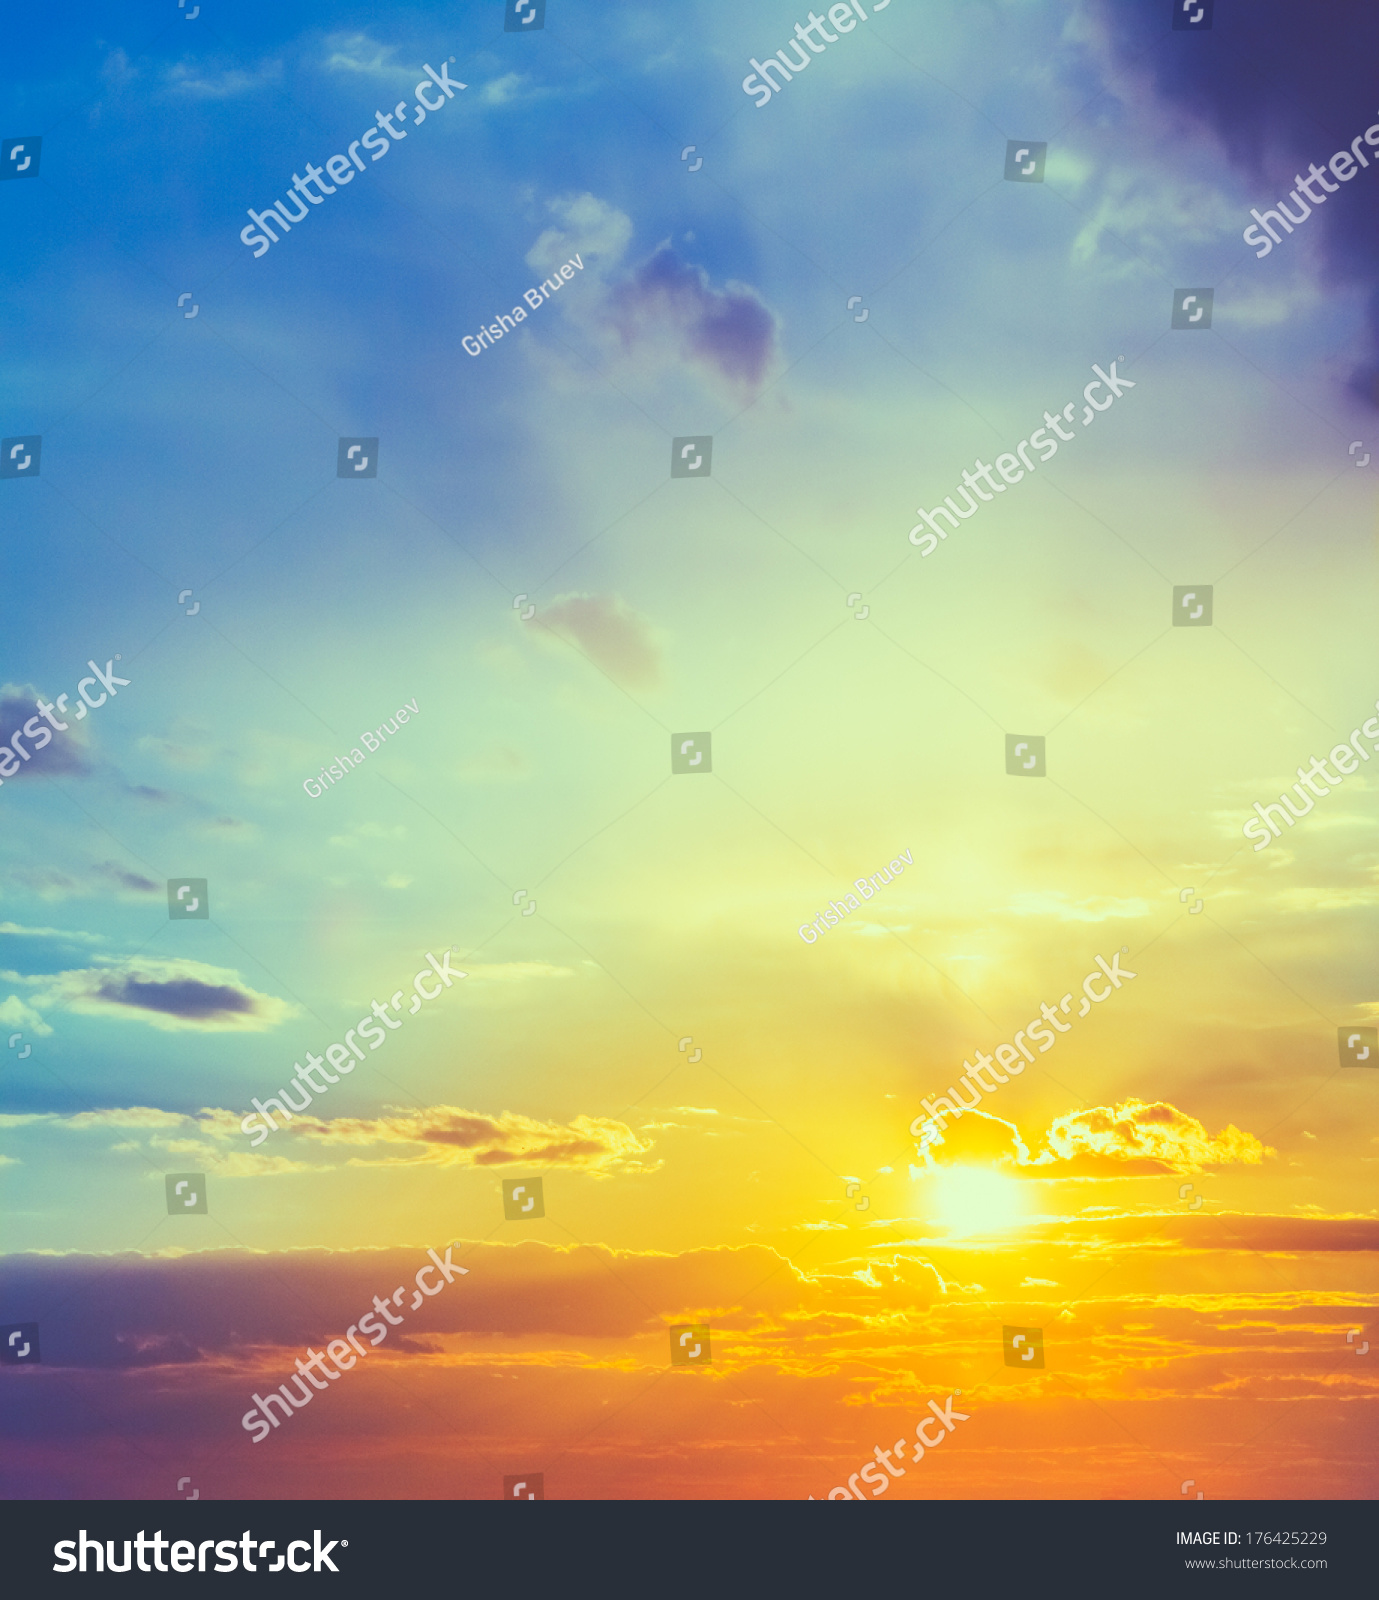 Sun, sunset, sunrise. Colorful toned instant photo #176425229